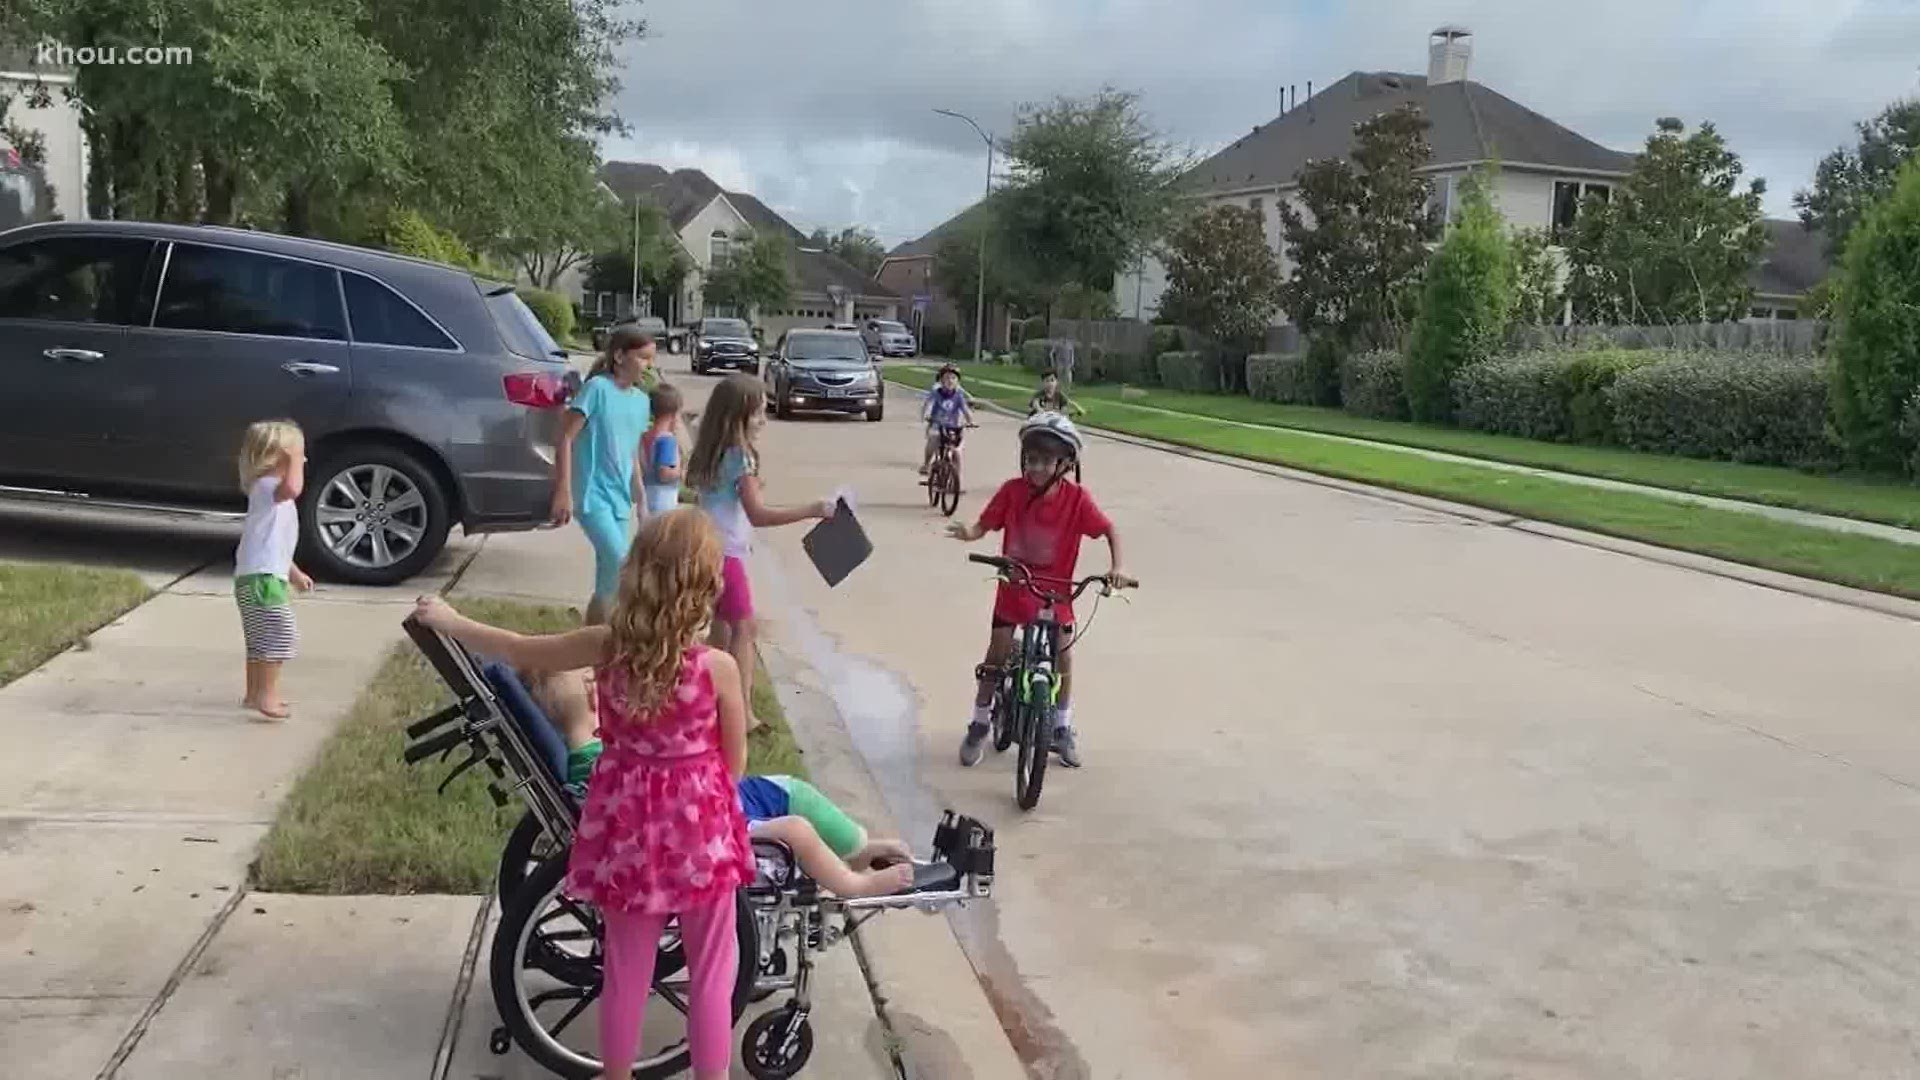 Heartwarming: Neighbors surprise boy with birthday parade